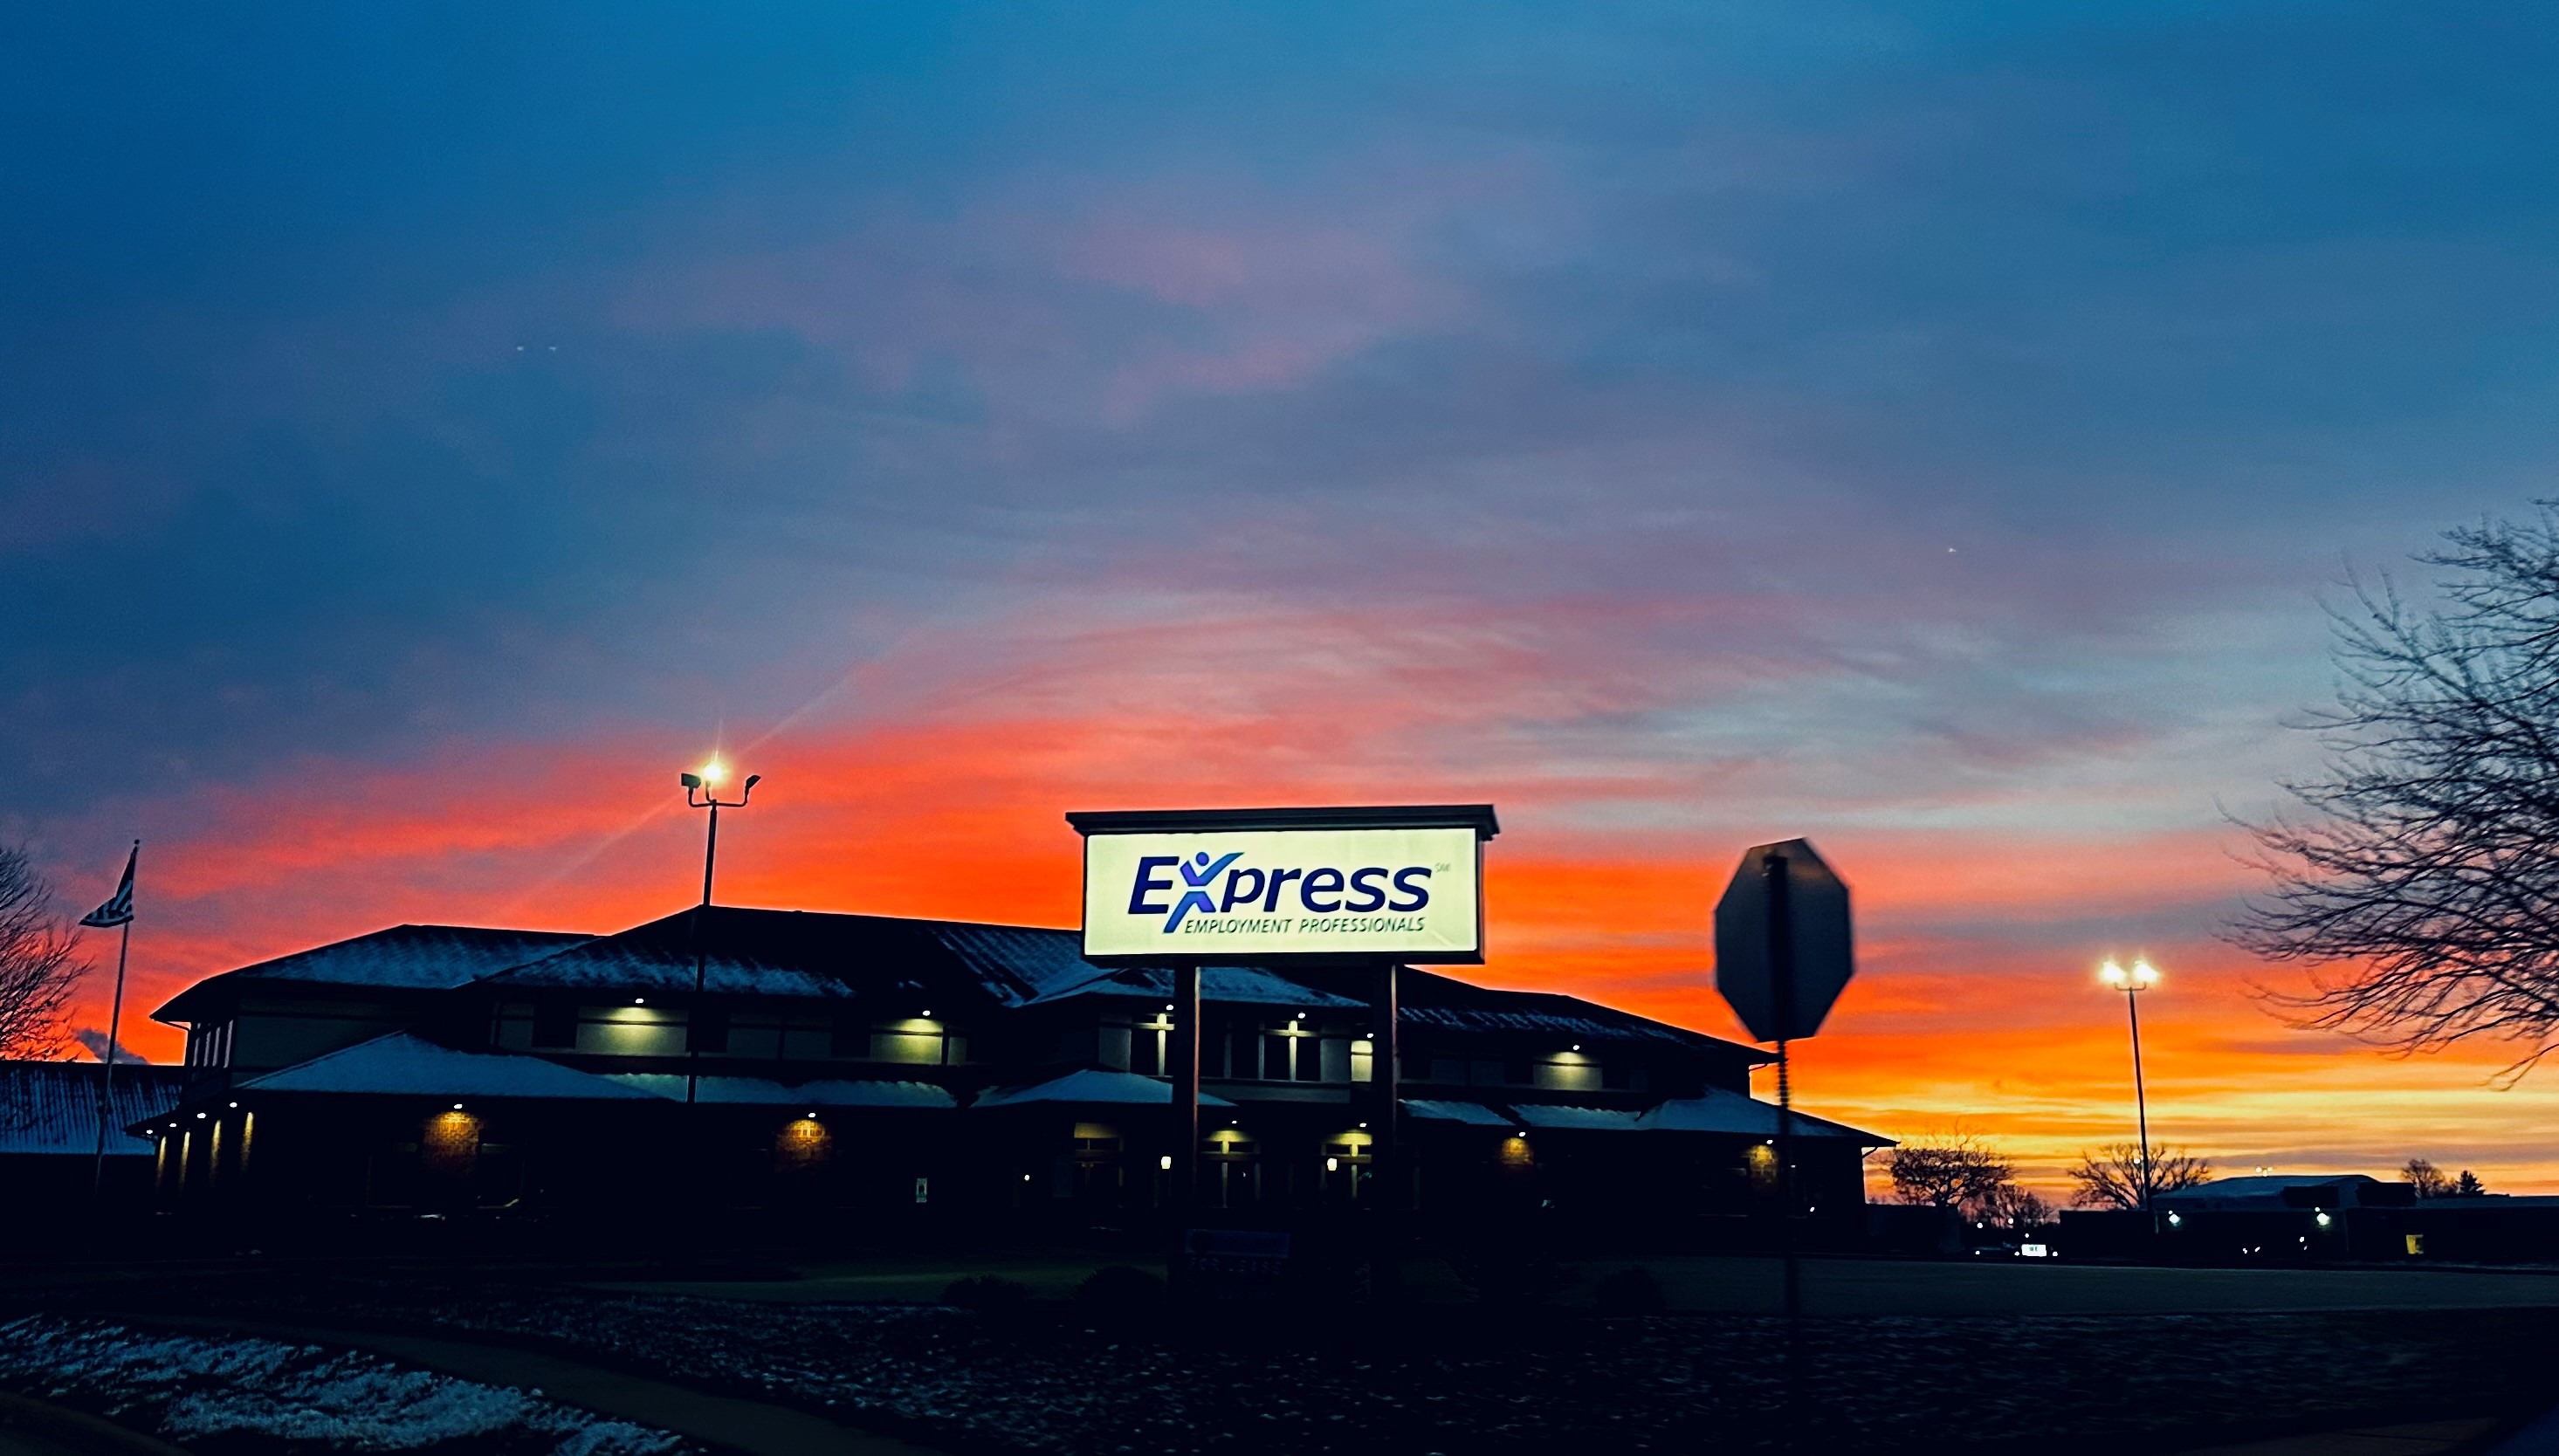 Express Building